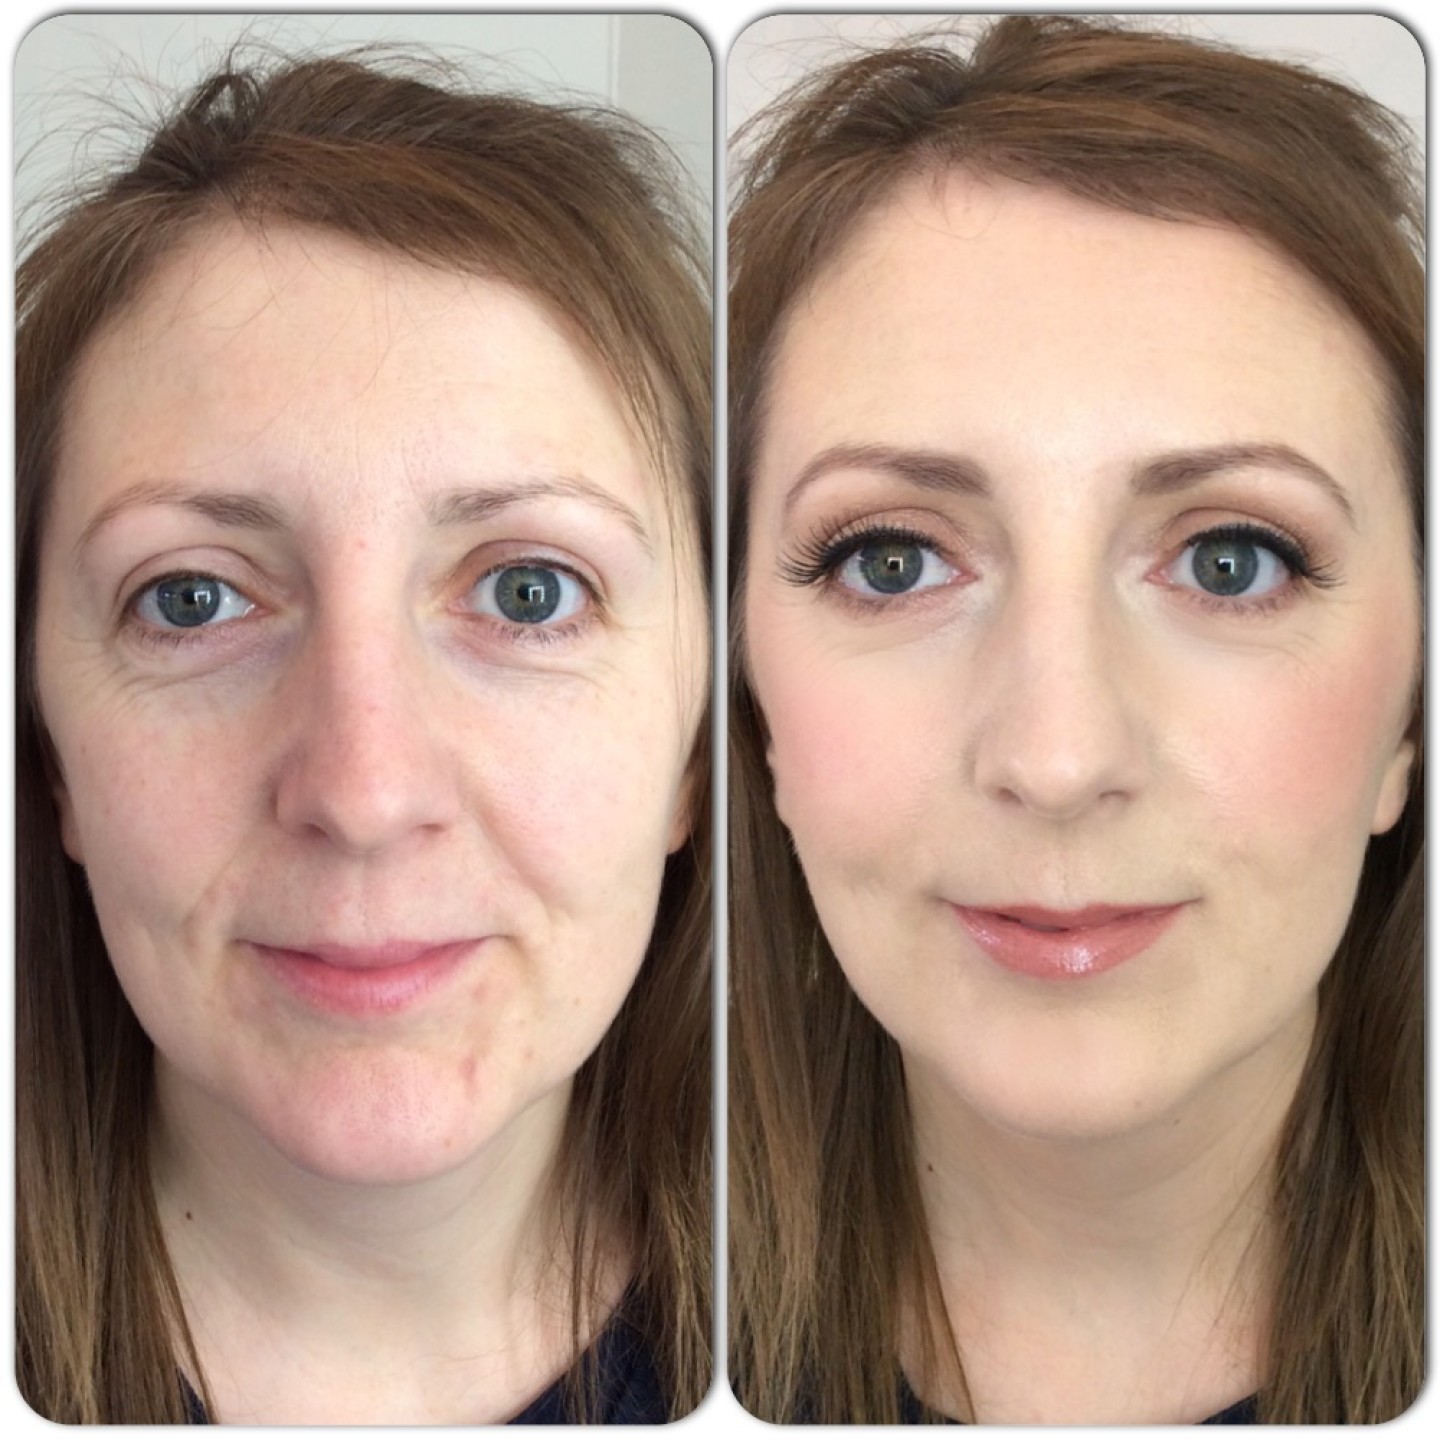 Before and after makeup by Tina Brocklebank